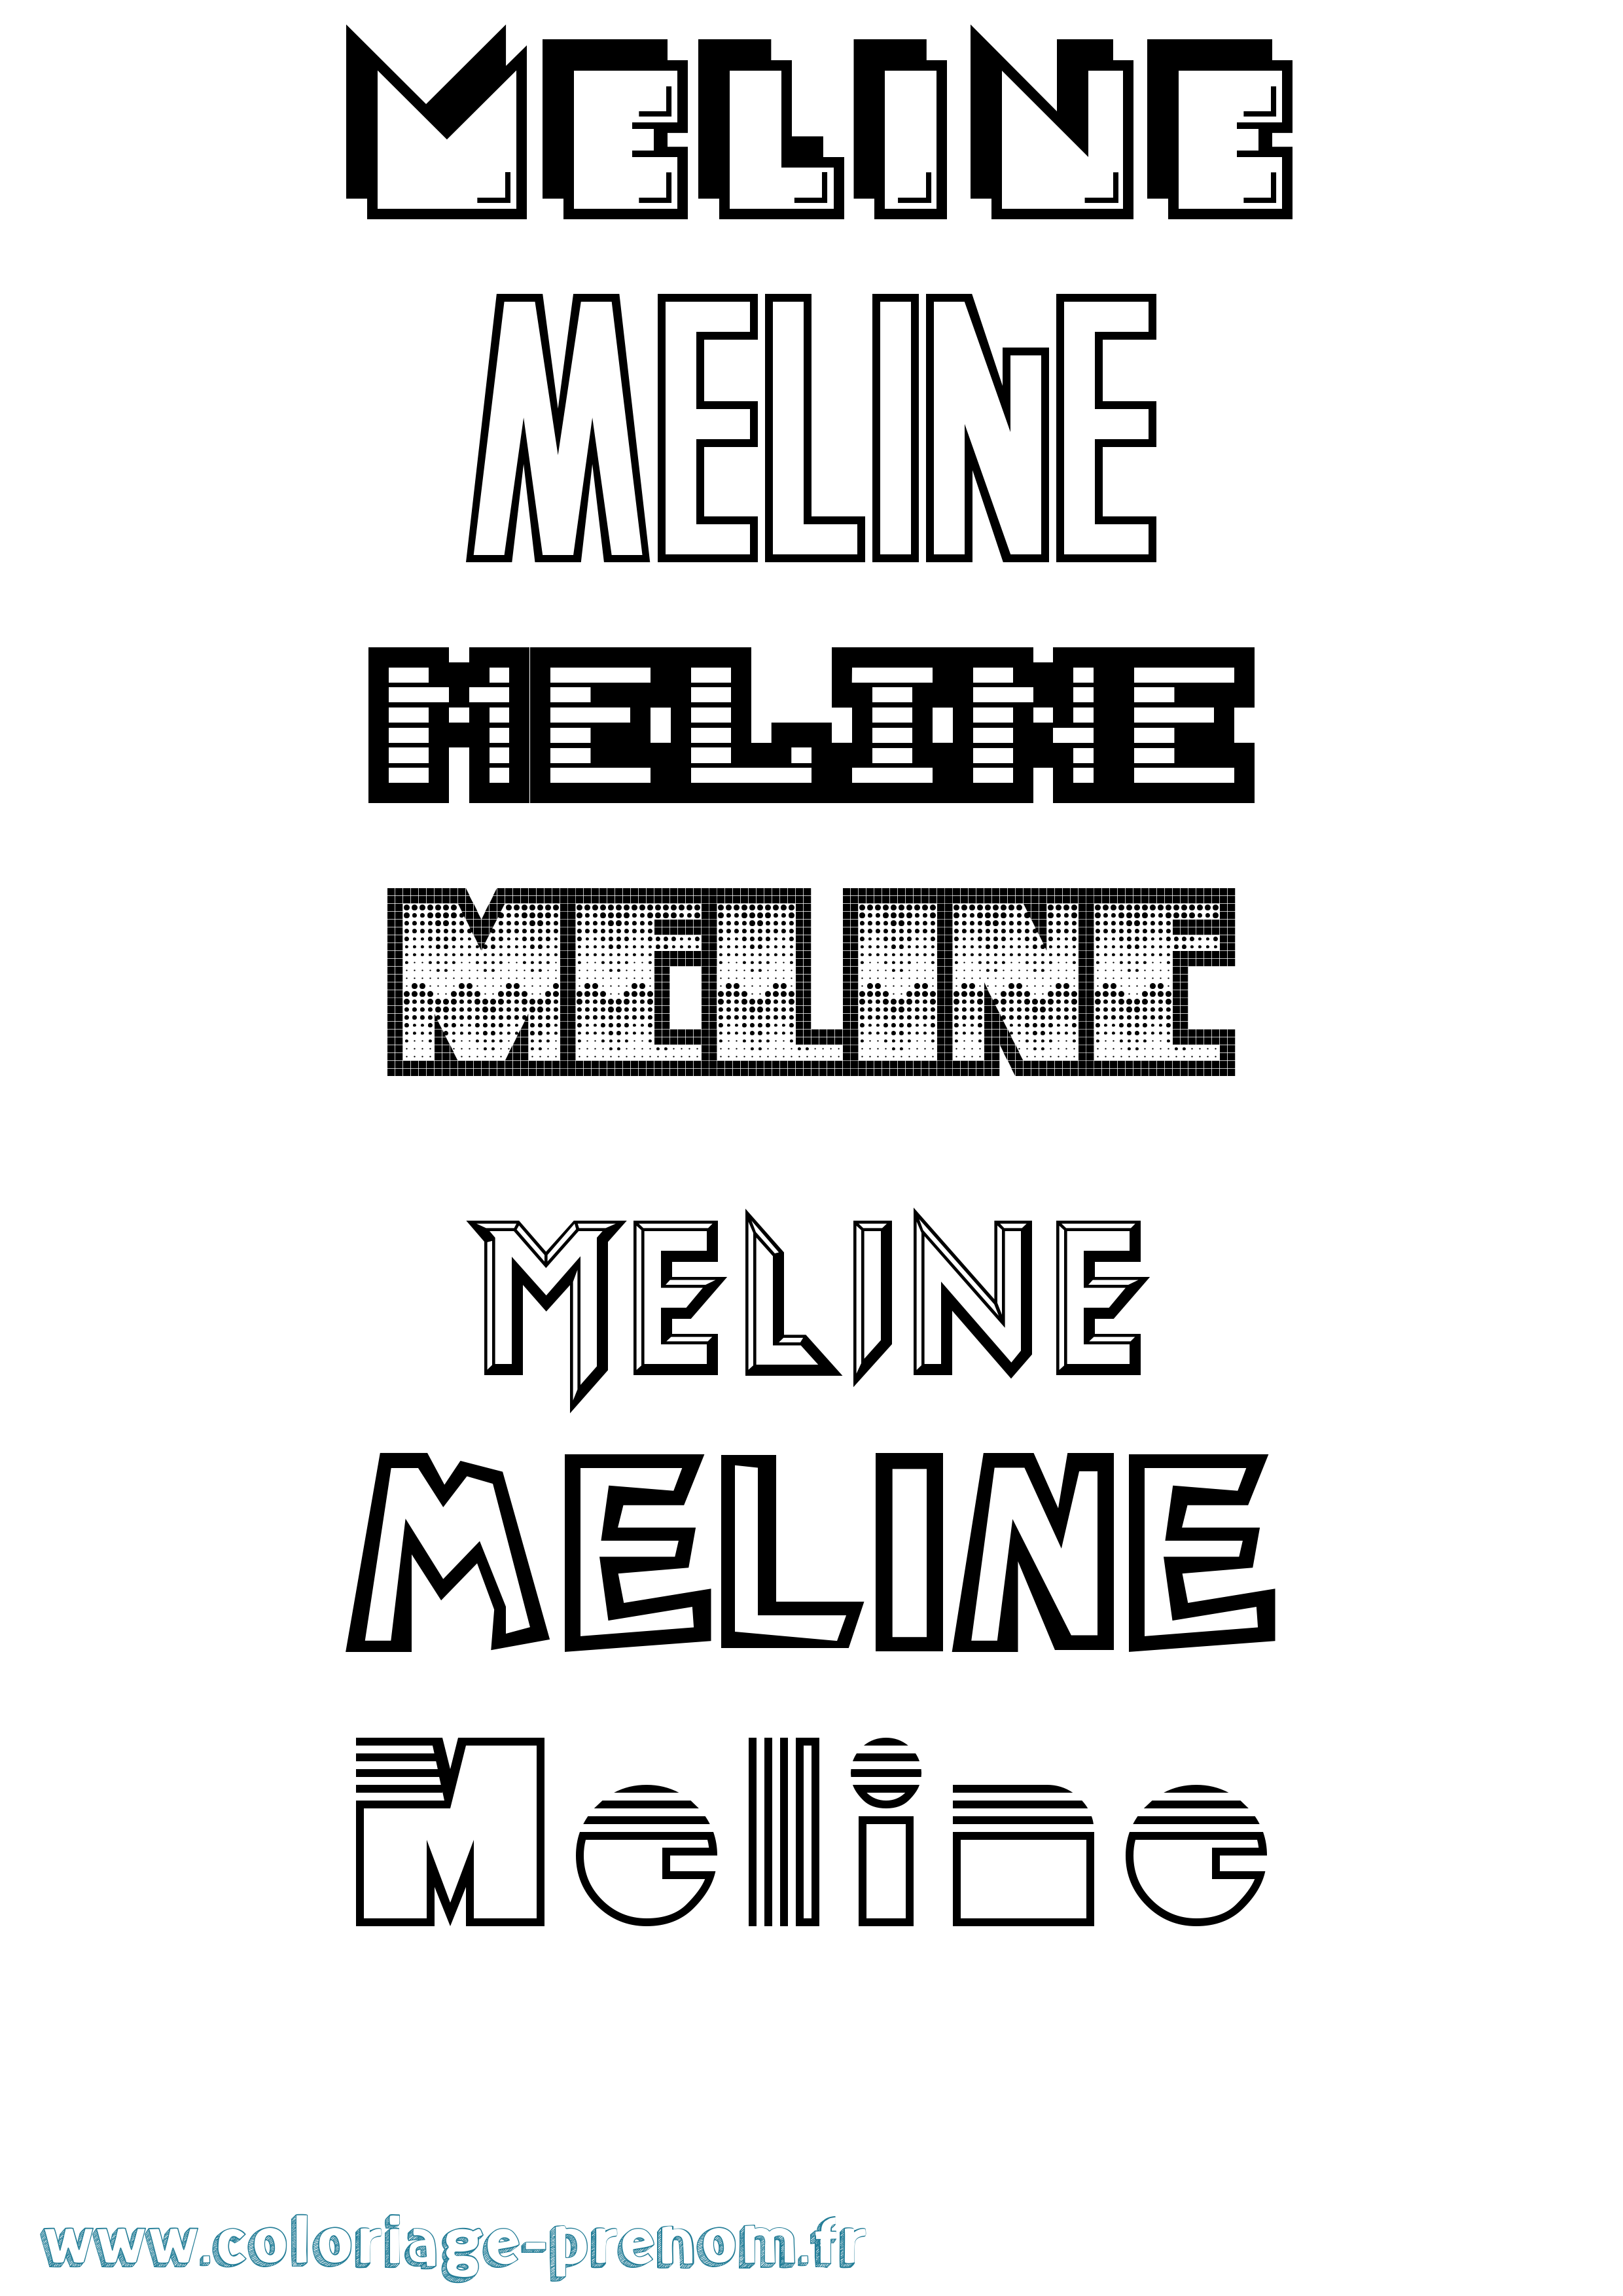 Coloriage prénom Meline